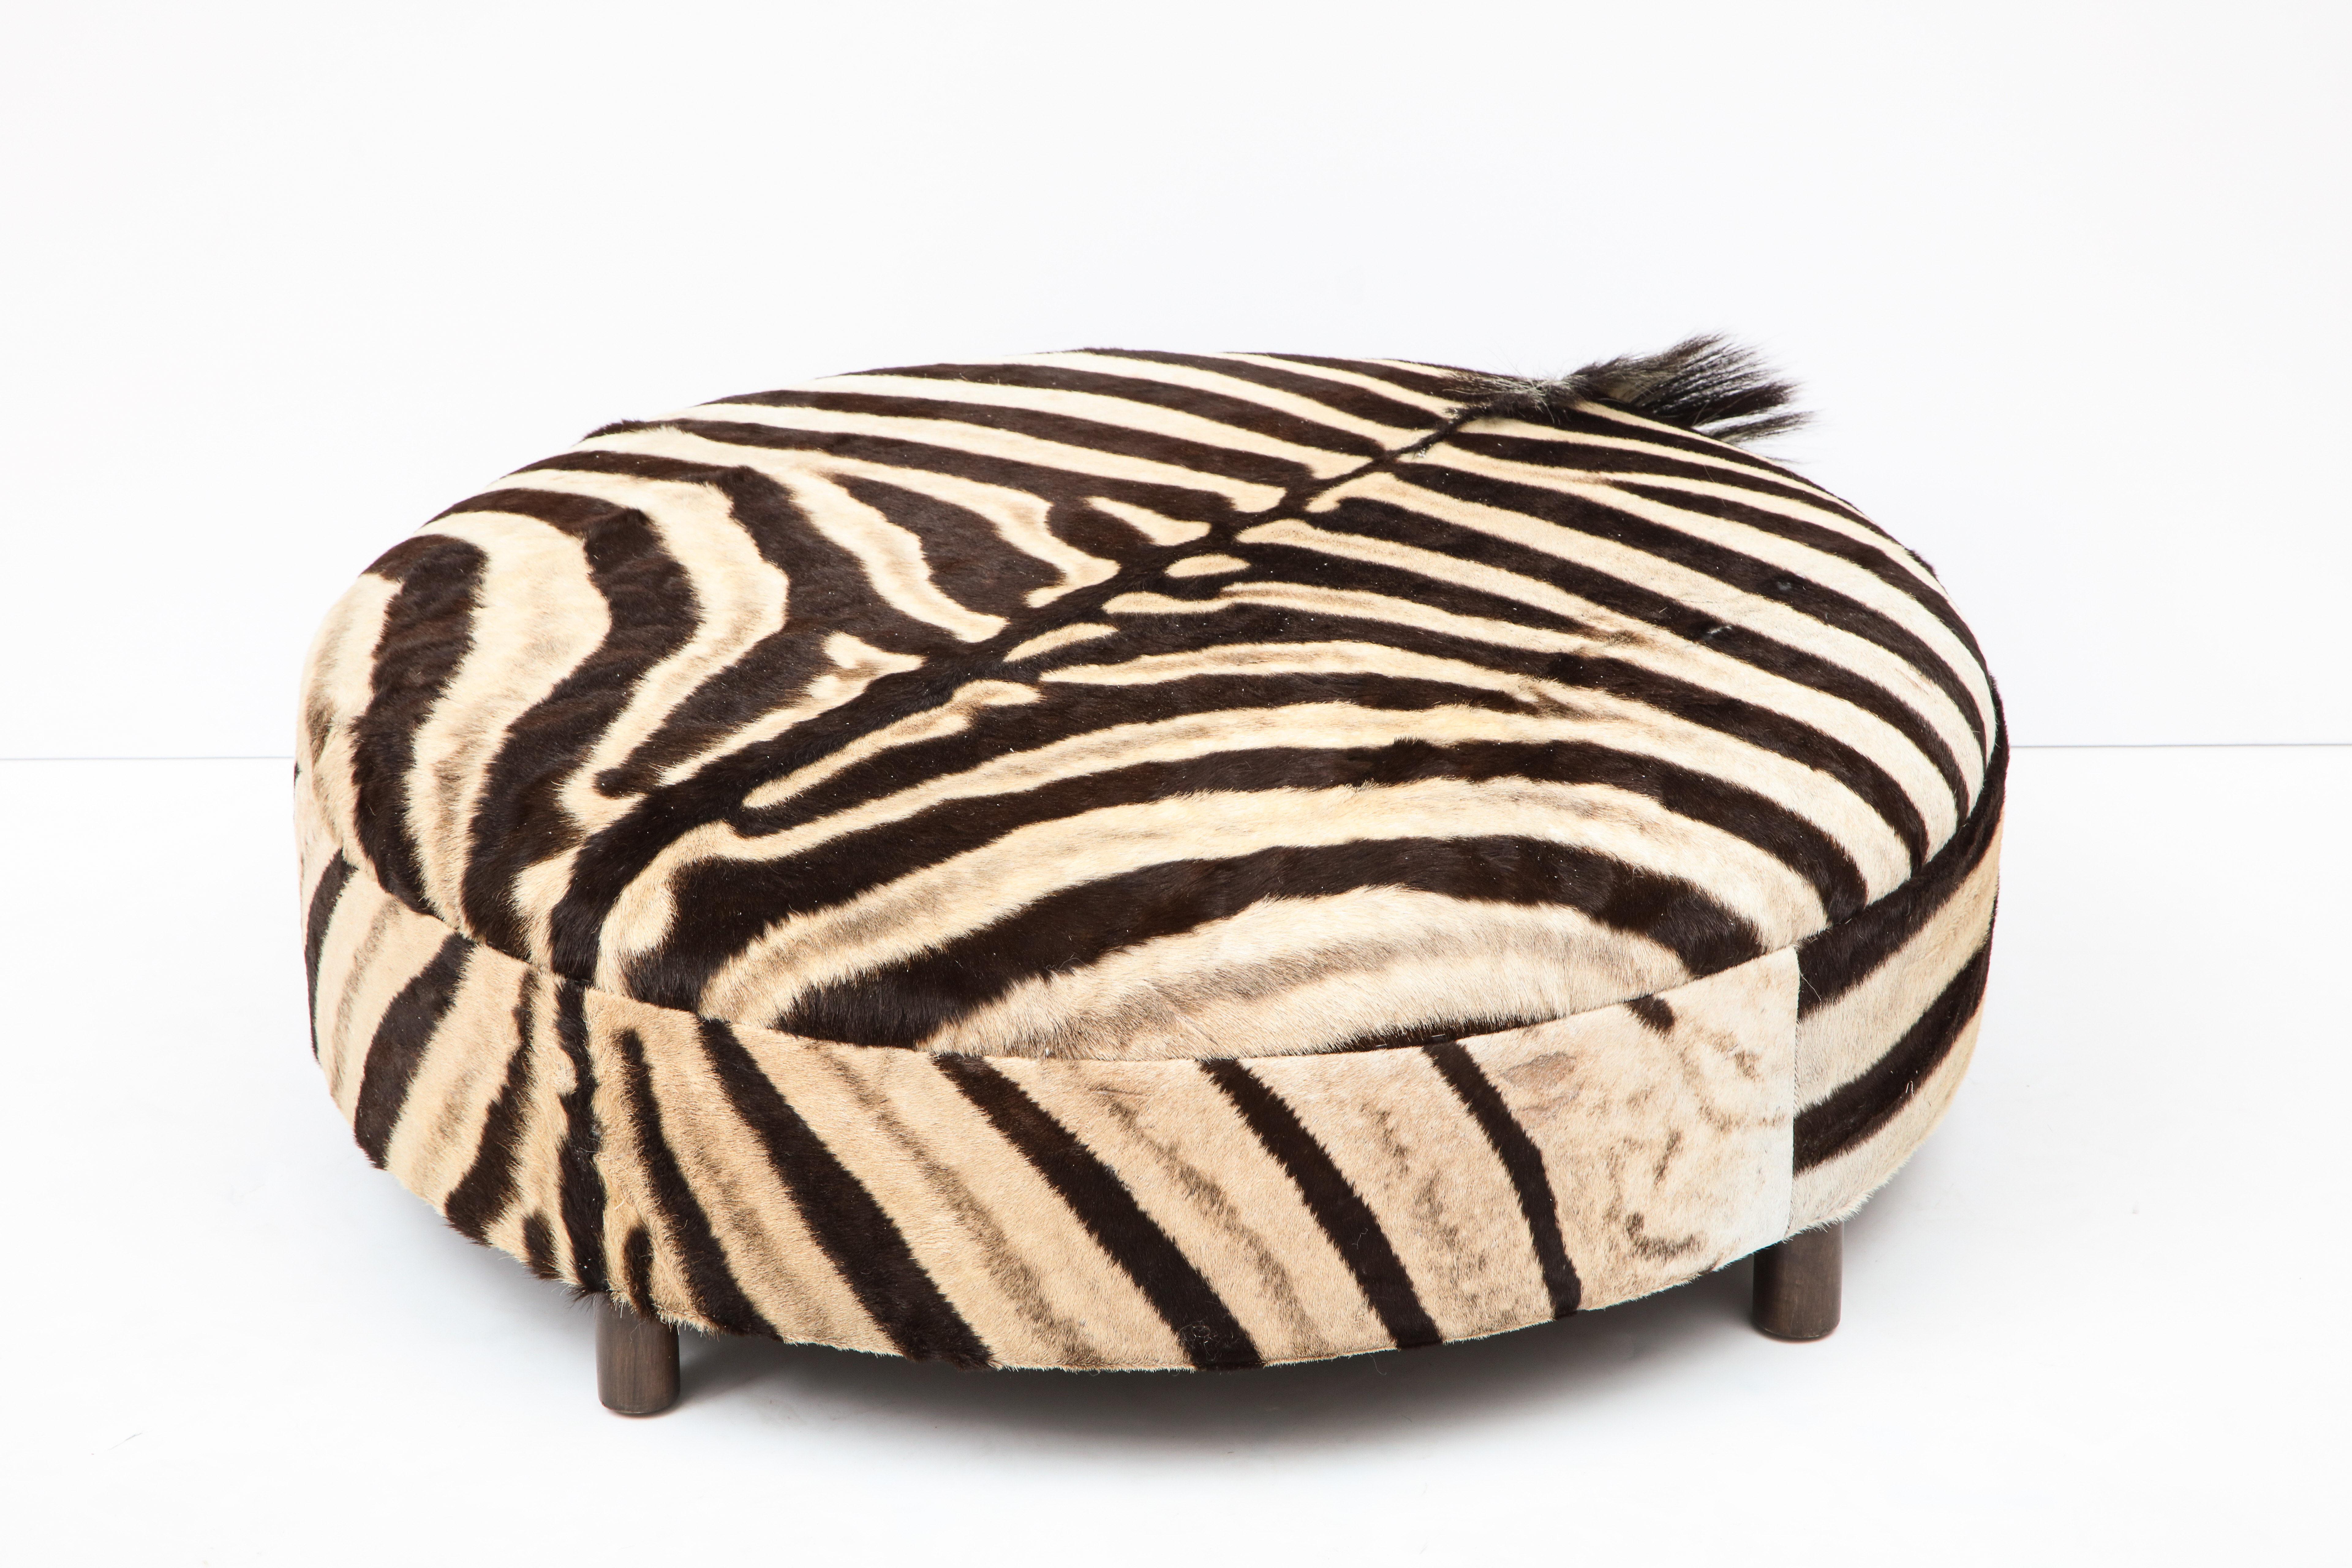 Zebra Hide Ottoman, Chocolate & Cream, Round, Contemporary, New Hides, USA Made For Sale 2